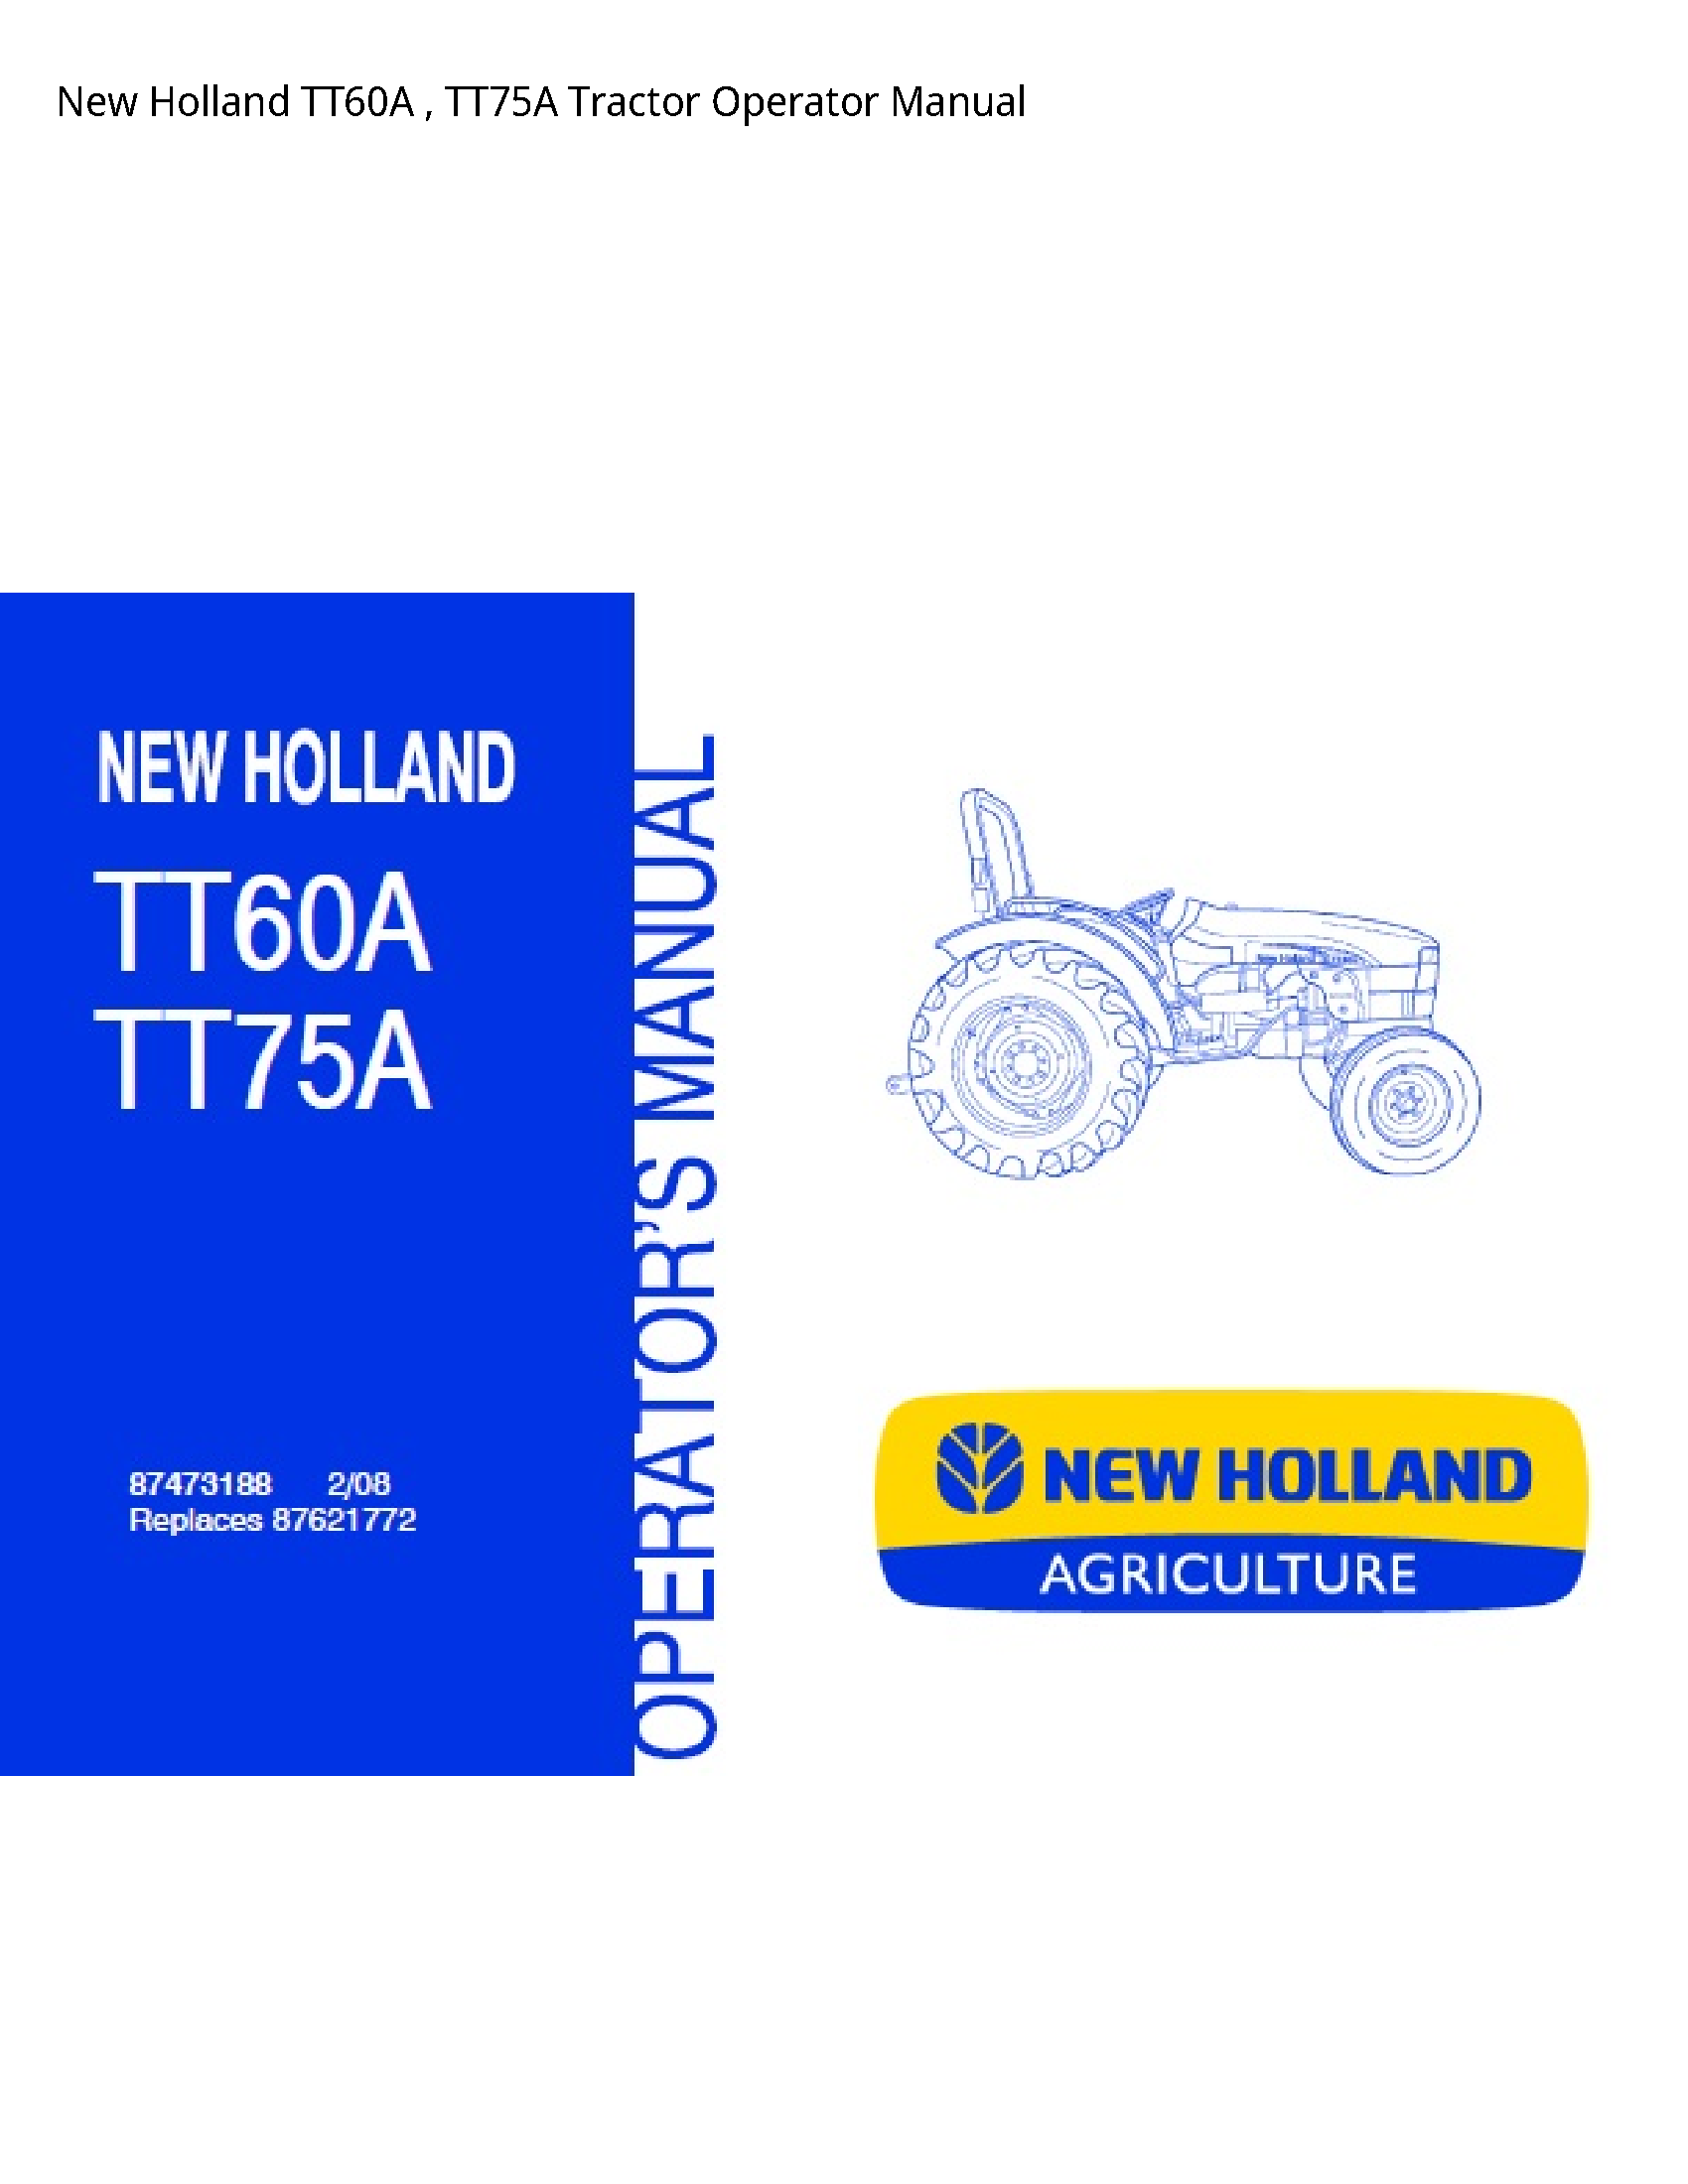 New Holland TT60A Tractor Operator manual